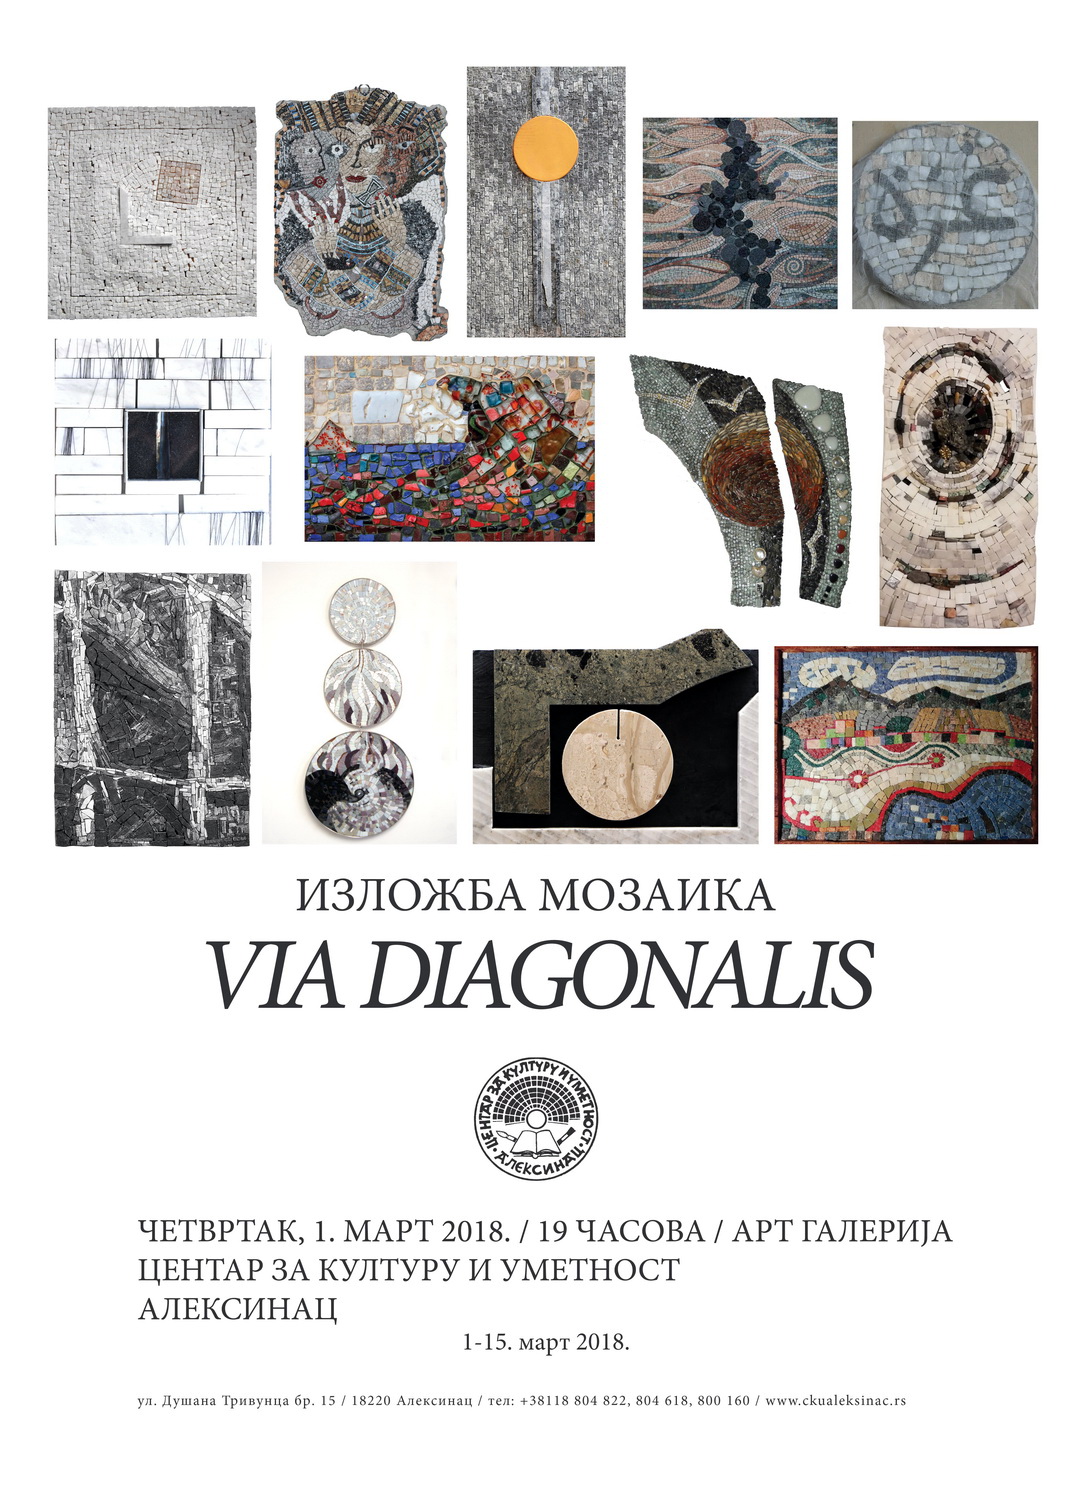 Изложба мозаика - Via Diagonalis